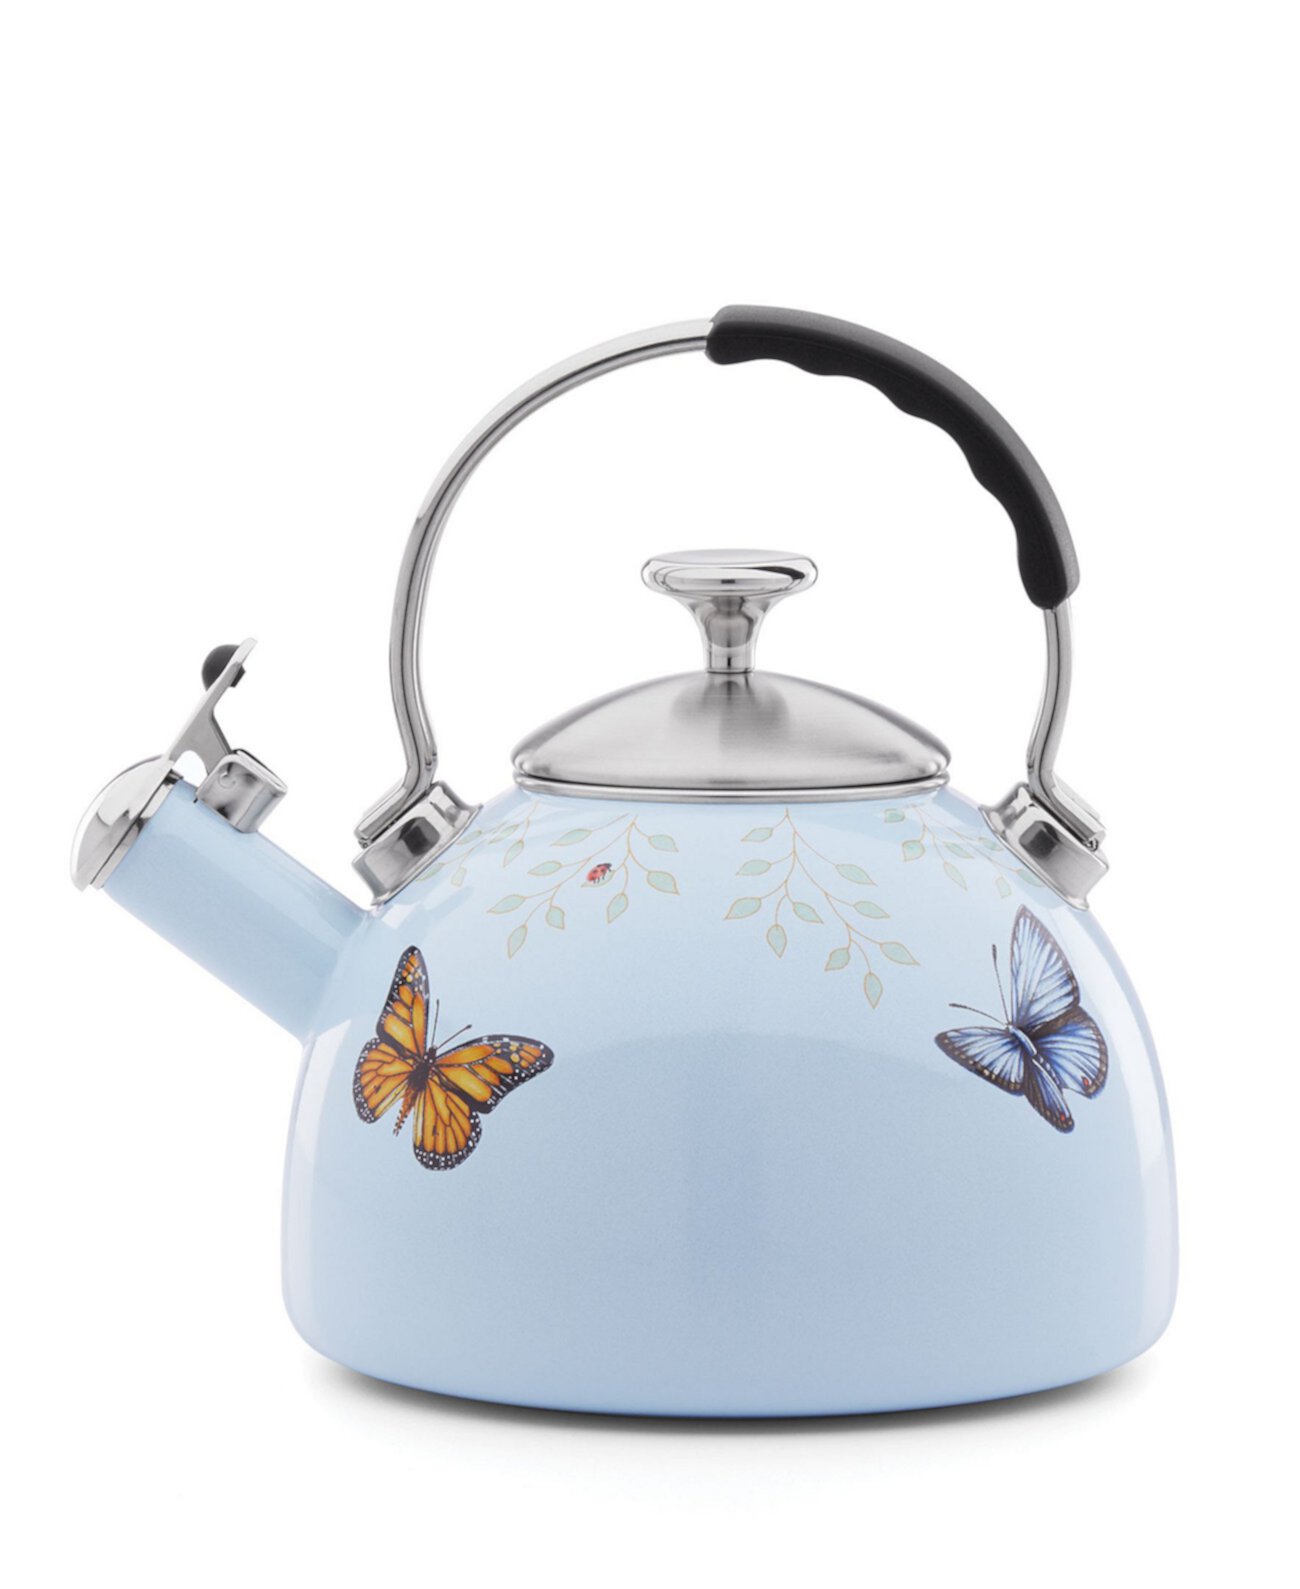 Интернет-магазин Usmall.ru: в продаже Butterfly Meadow Kitchen Чайник с гол...